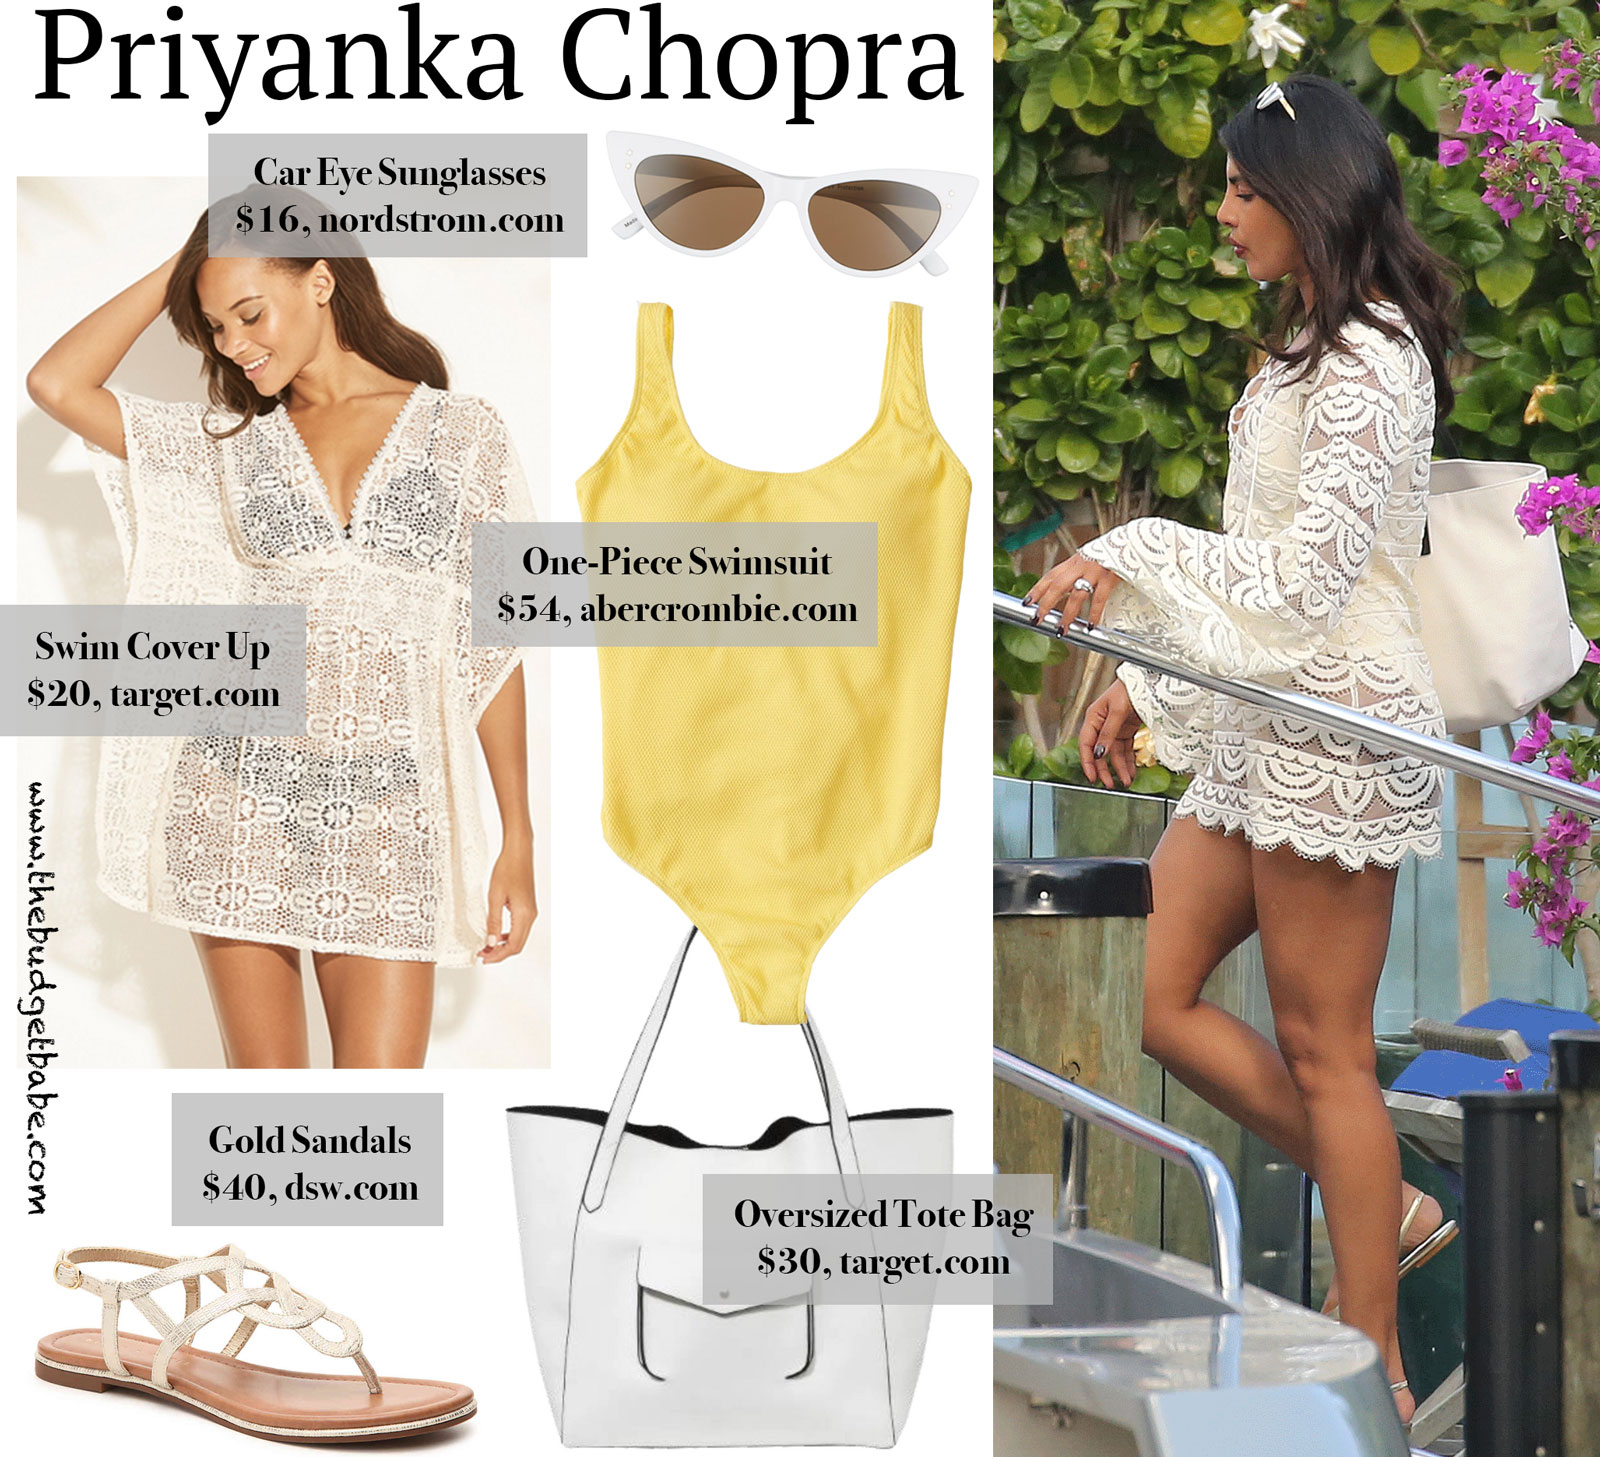 Priyanka Chopra White Swim Cover Up Look for Less